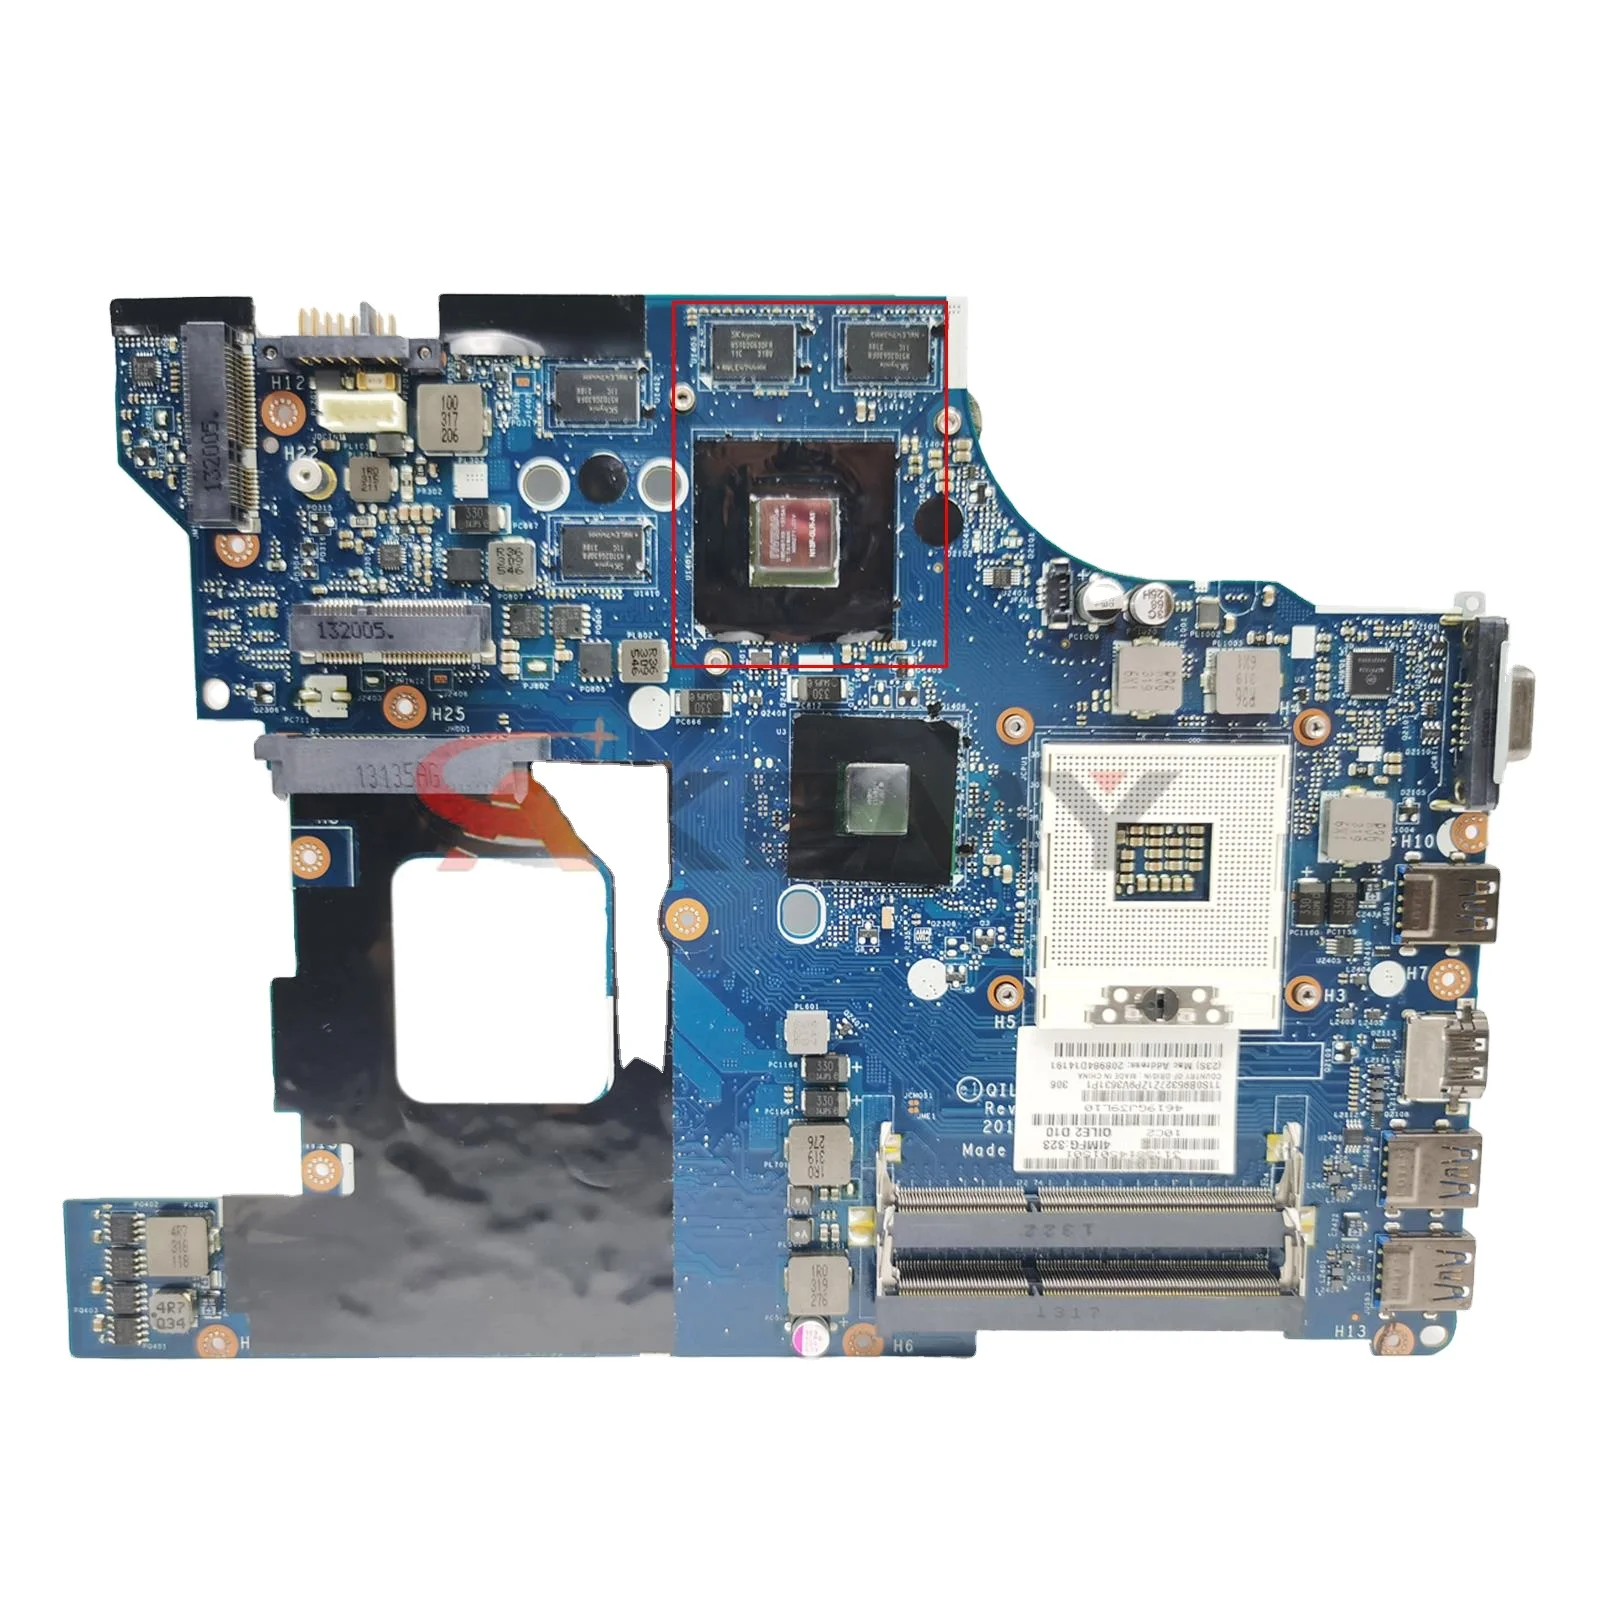 

LA-8133P Mainboard For Lenovo Thinkpad E530 E530C Laptop Motherboard GT630M/635M 2G GPU HM77 DDR3 FRU 04W4016 100% test ok